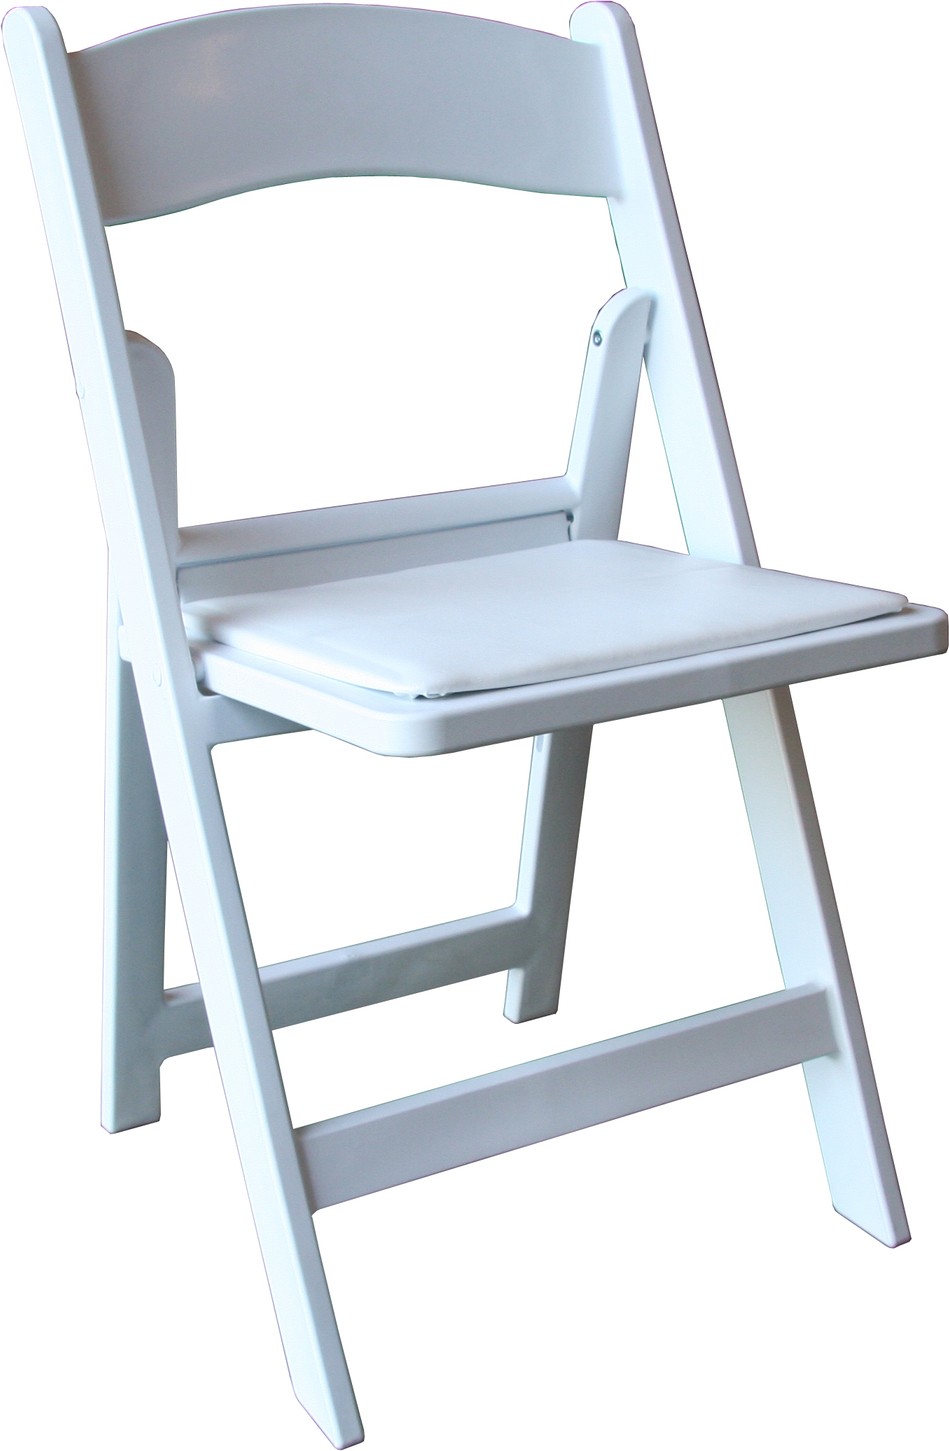 Plus size folding chair